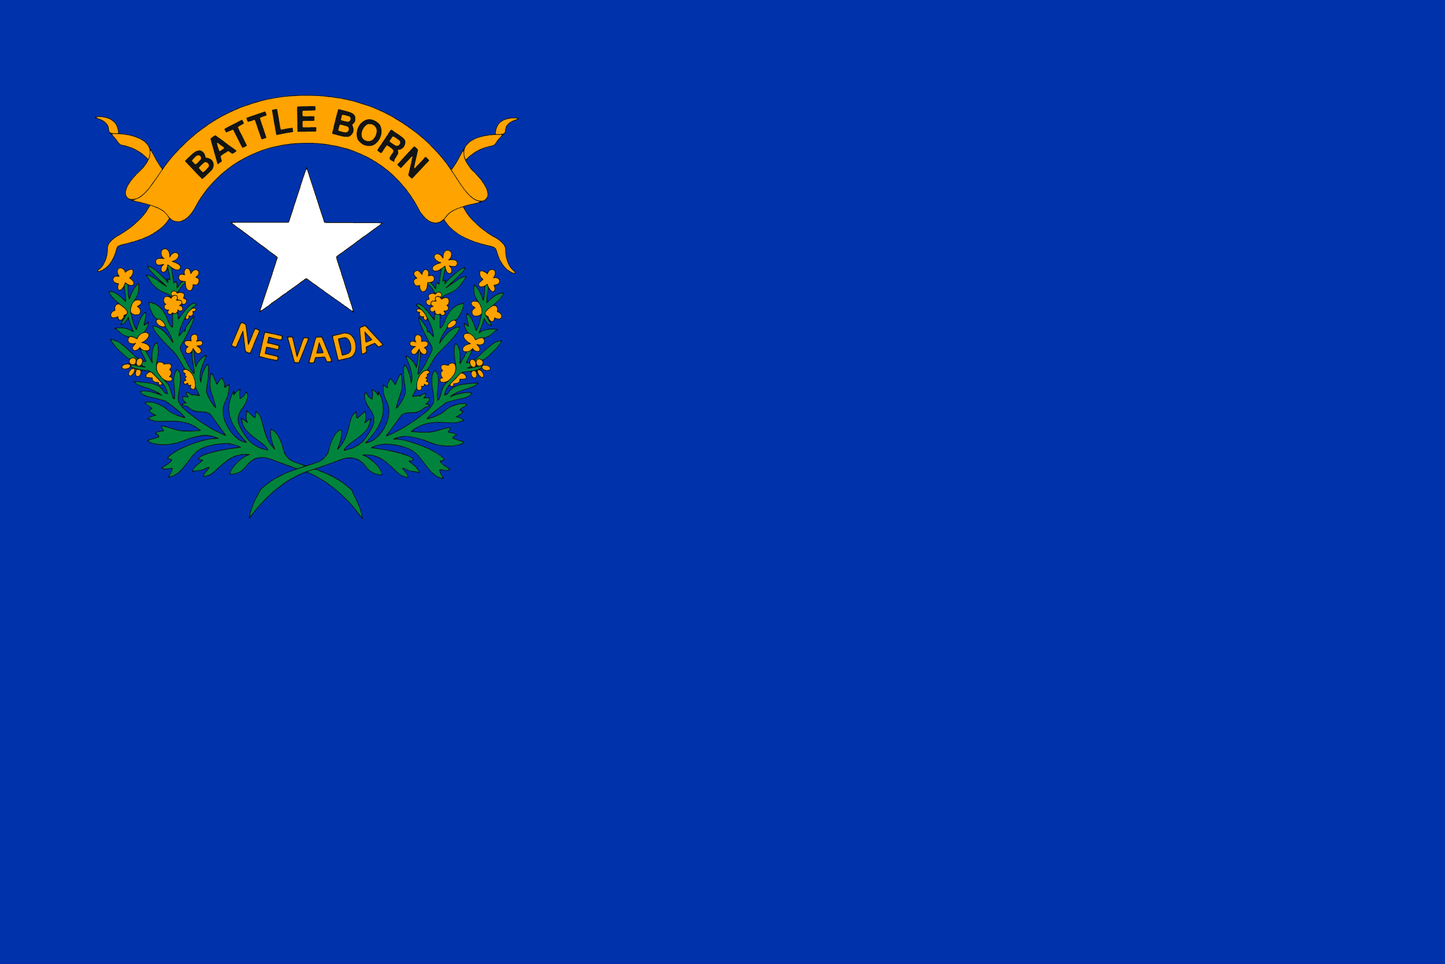 Nevada State Flag - 5x8 Feet